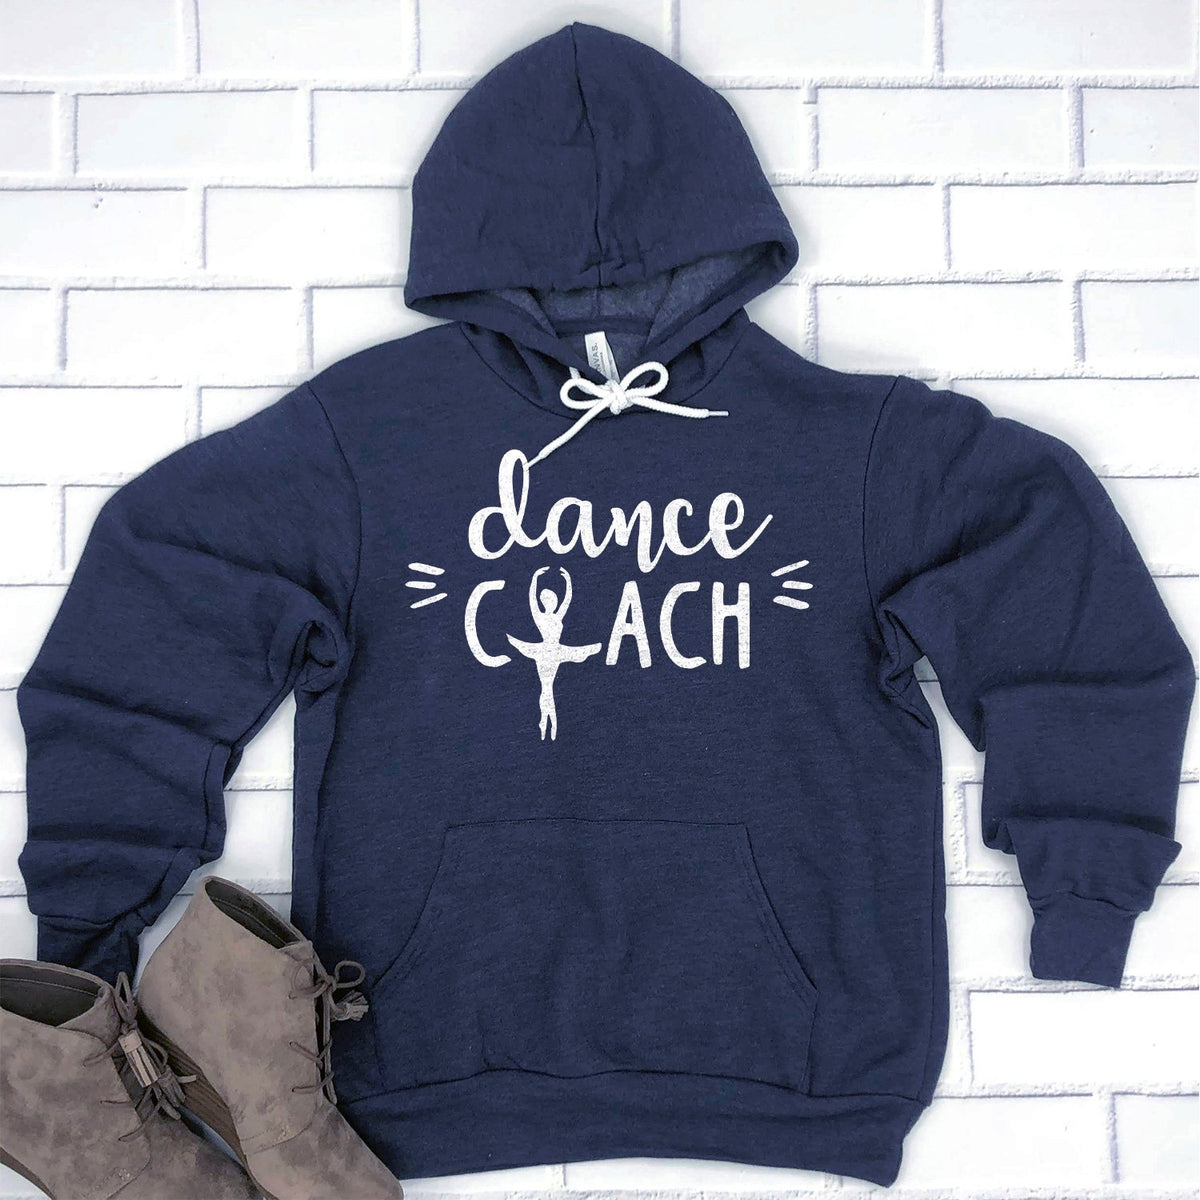 Dance Coach - Hoodie Sweatshirt